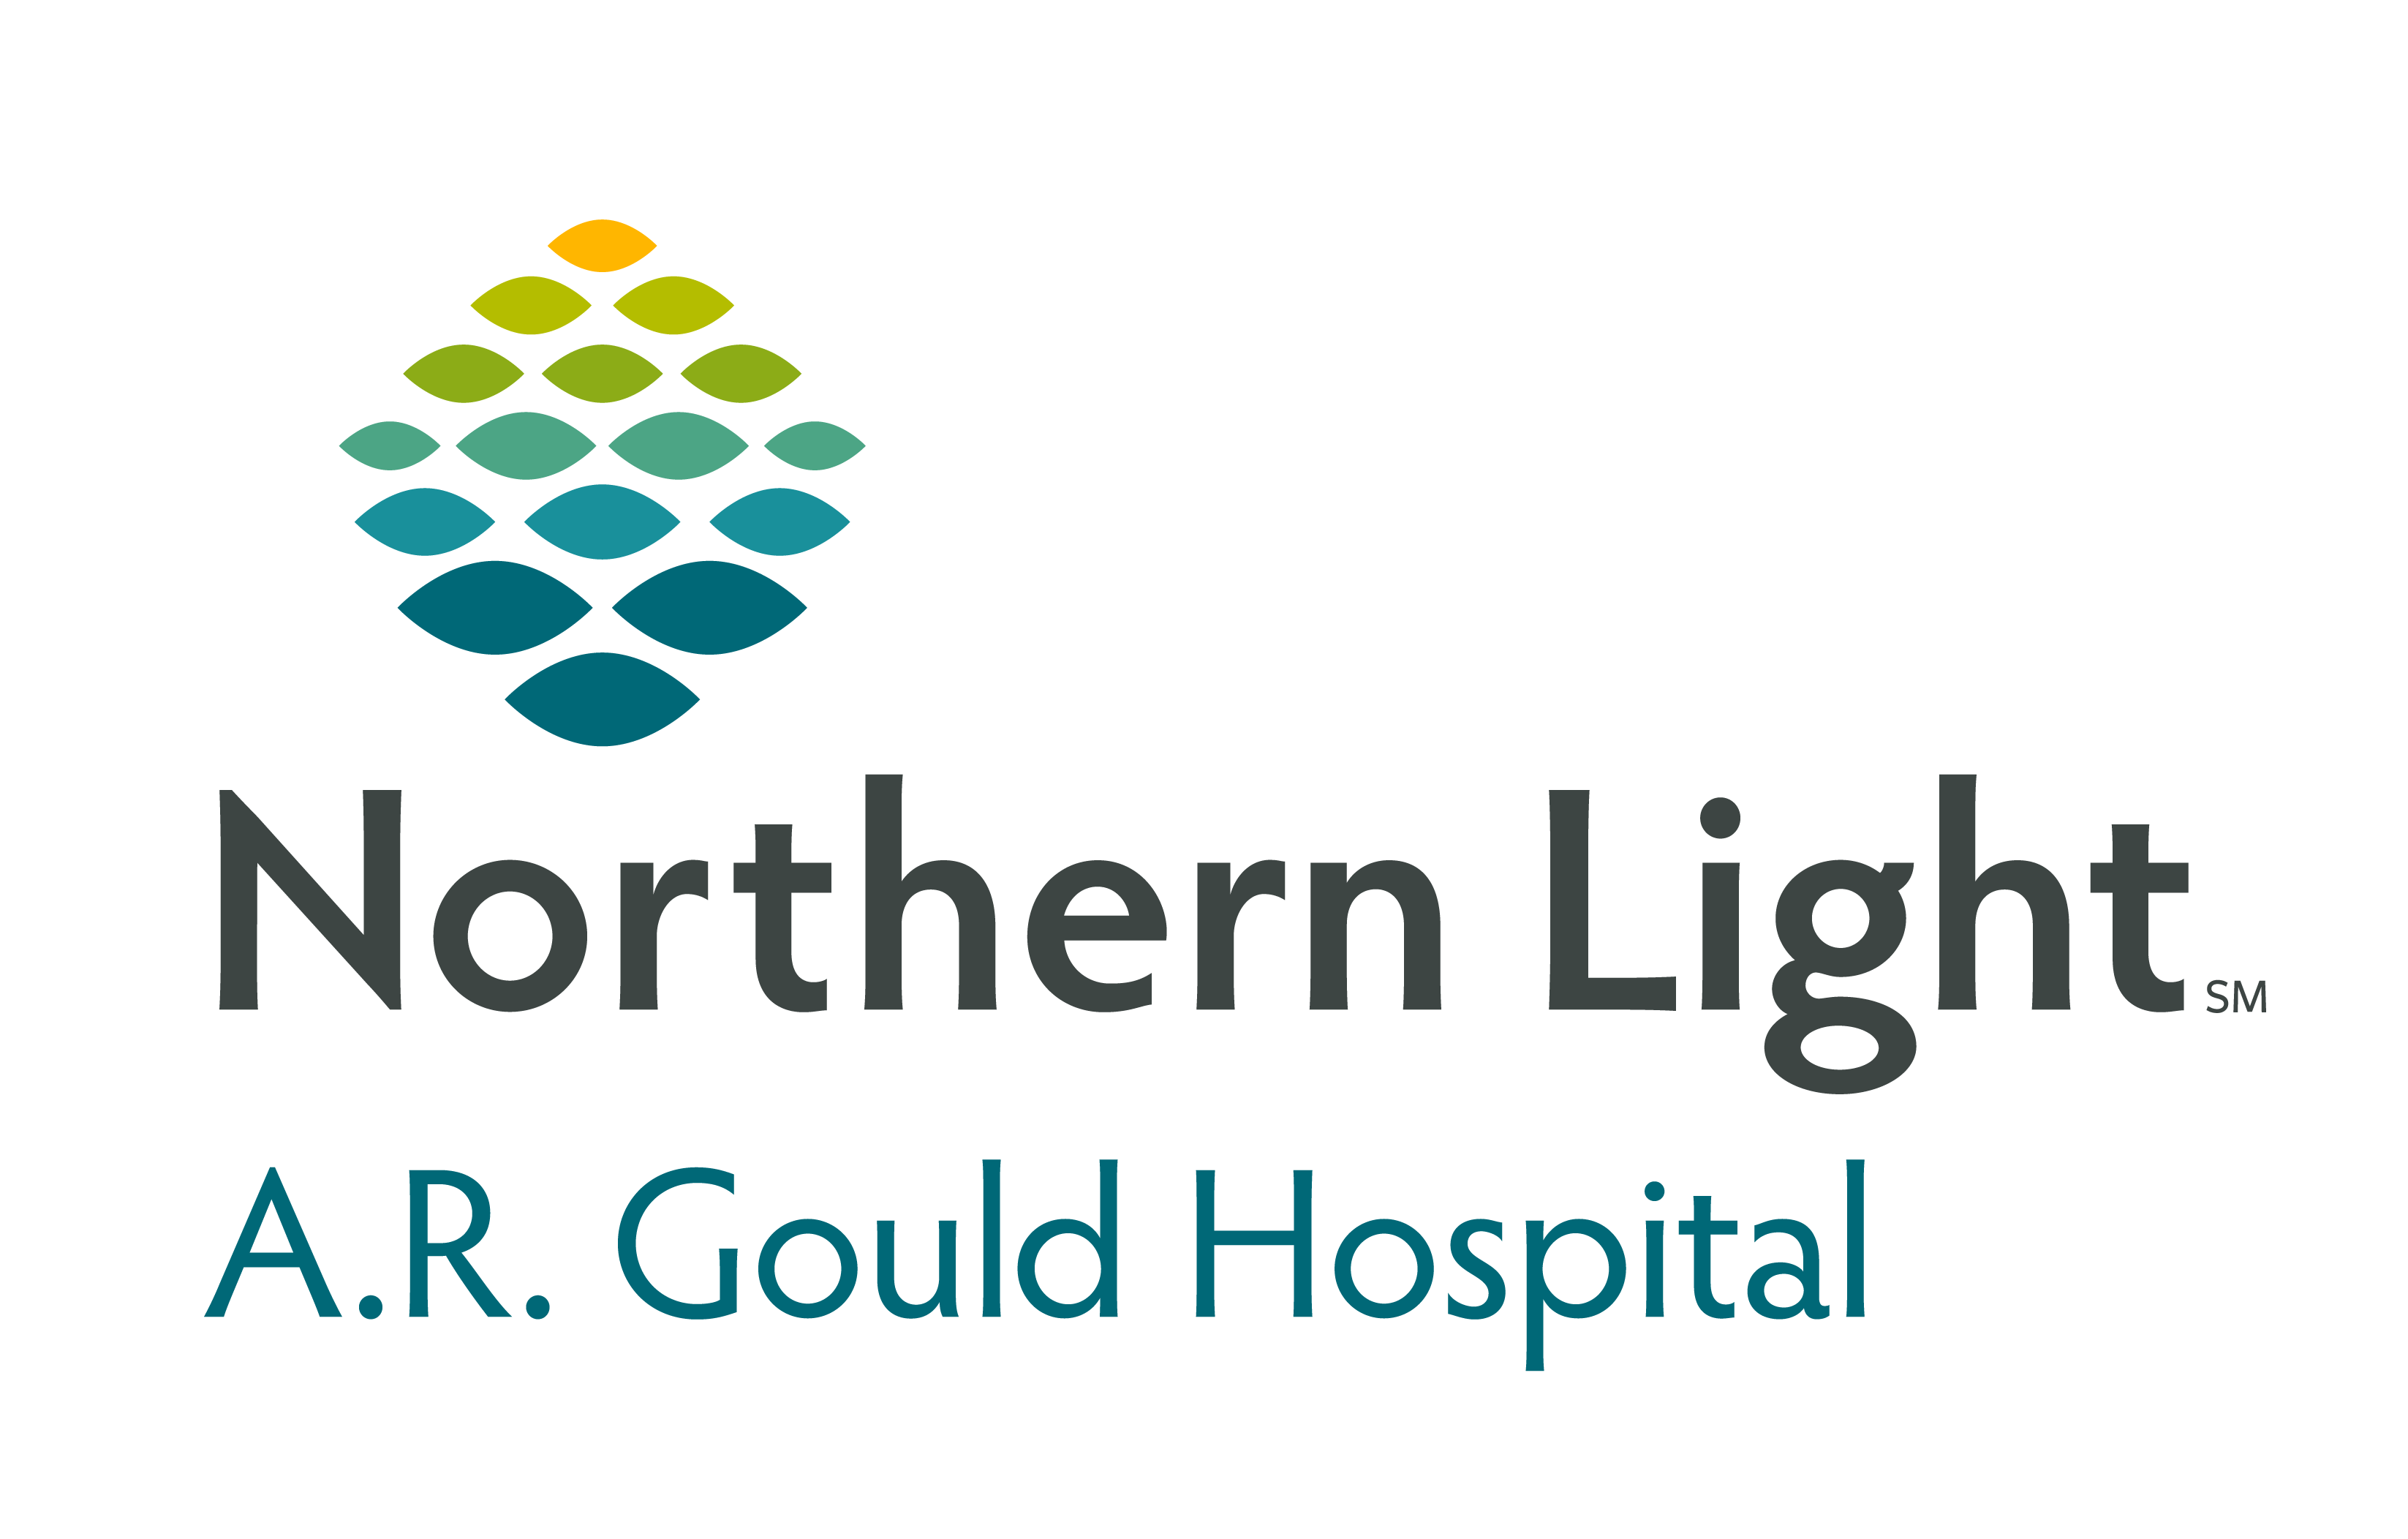 Northern Light A.R. Gould Hospital